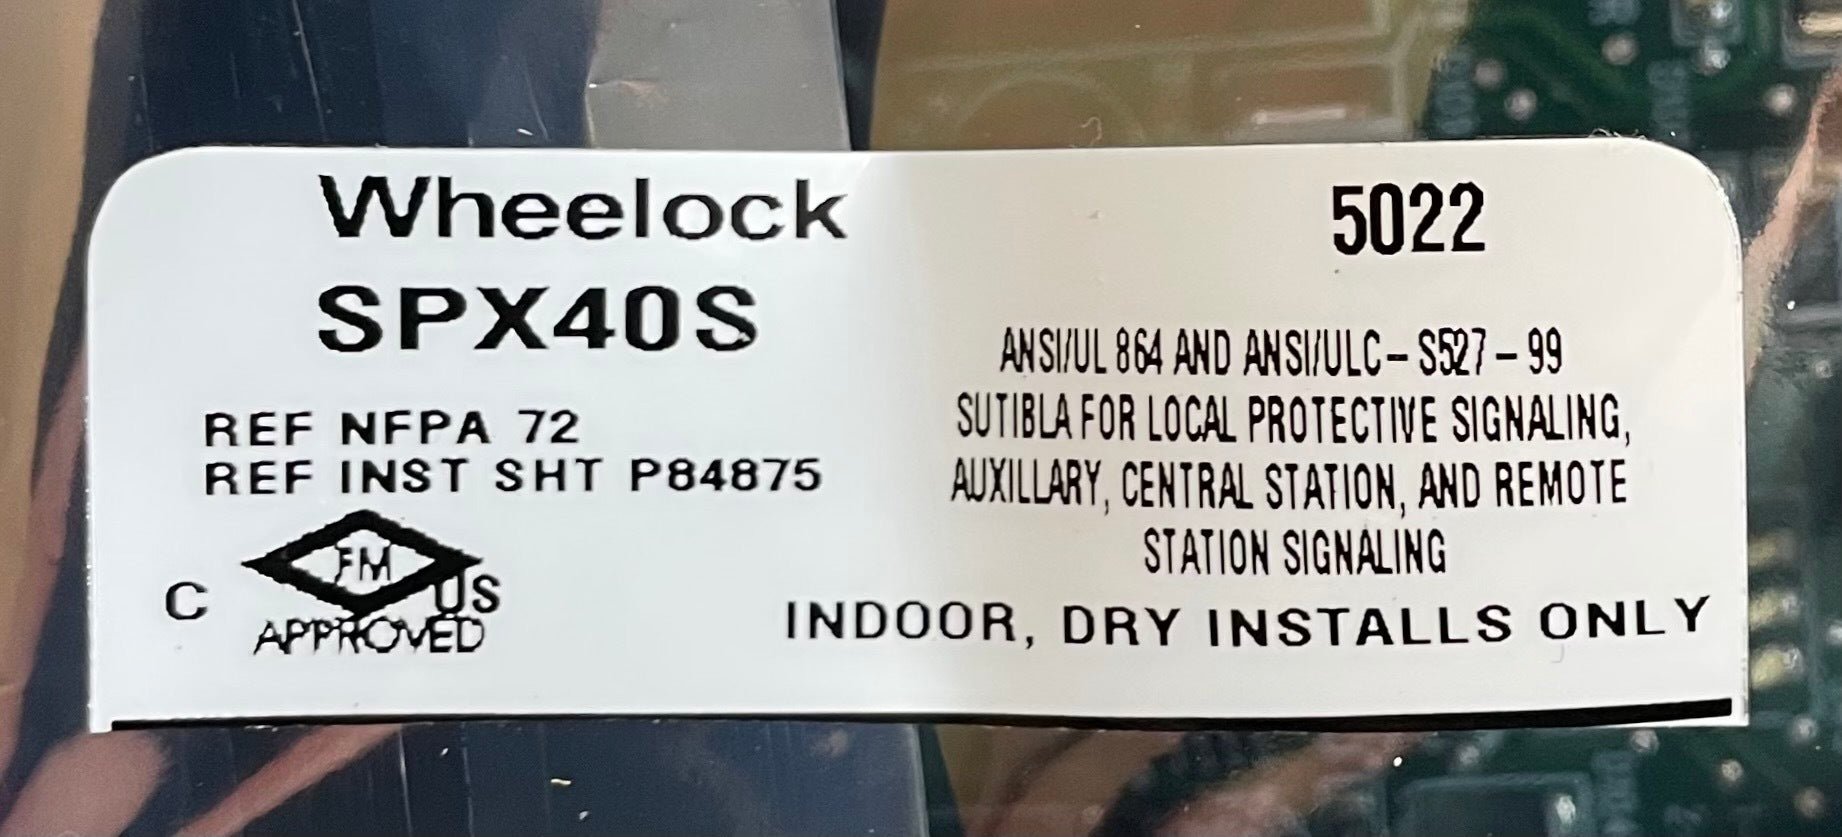 Wheelock SPX40S - The Fire Alarm Supplier